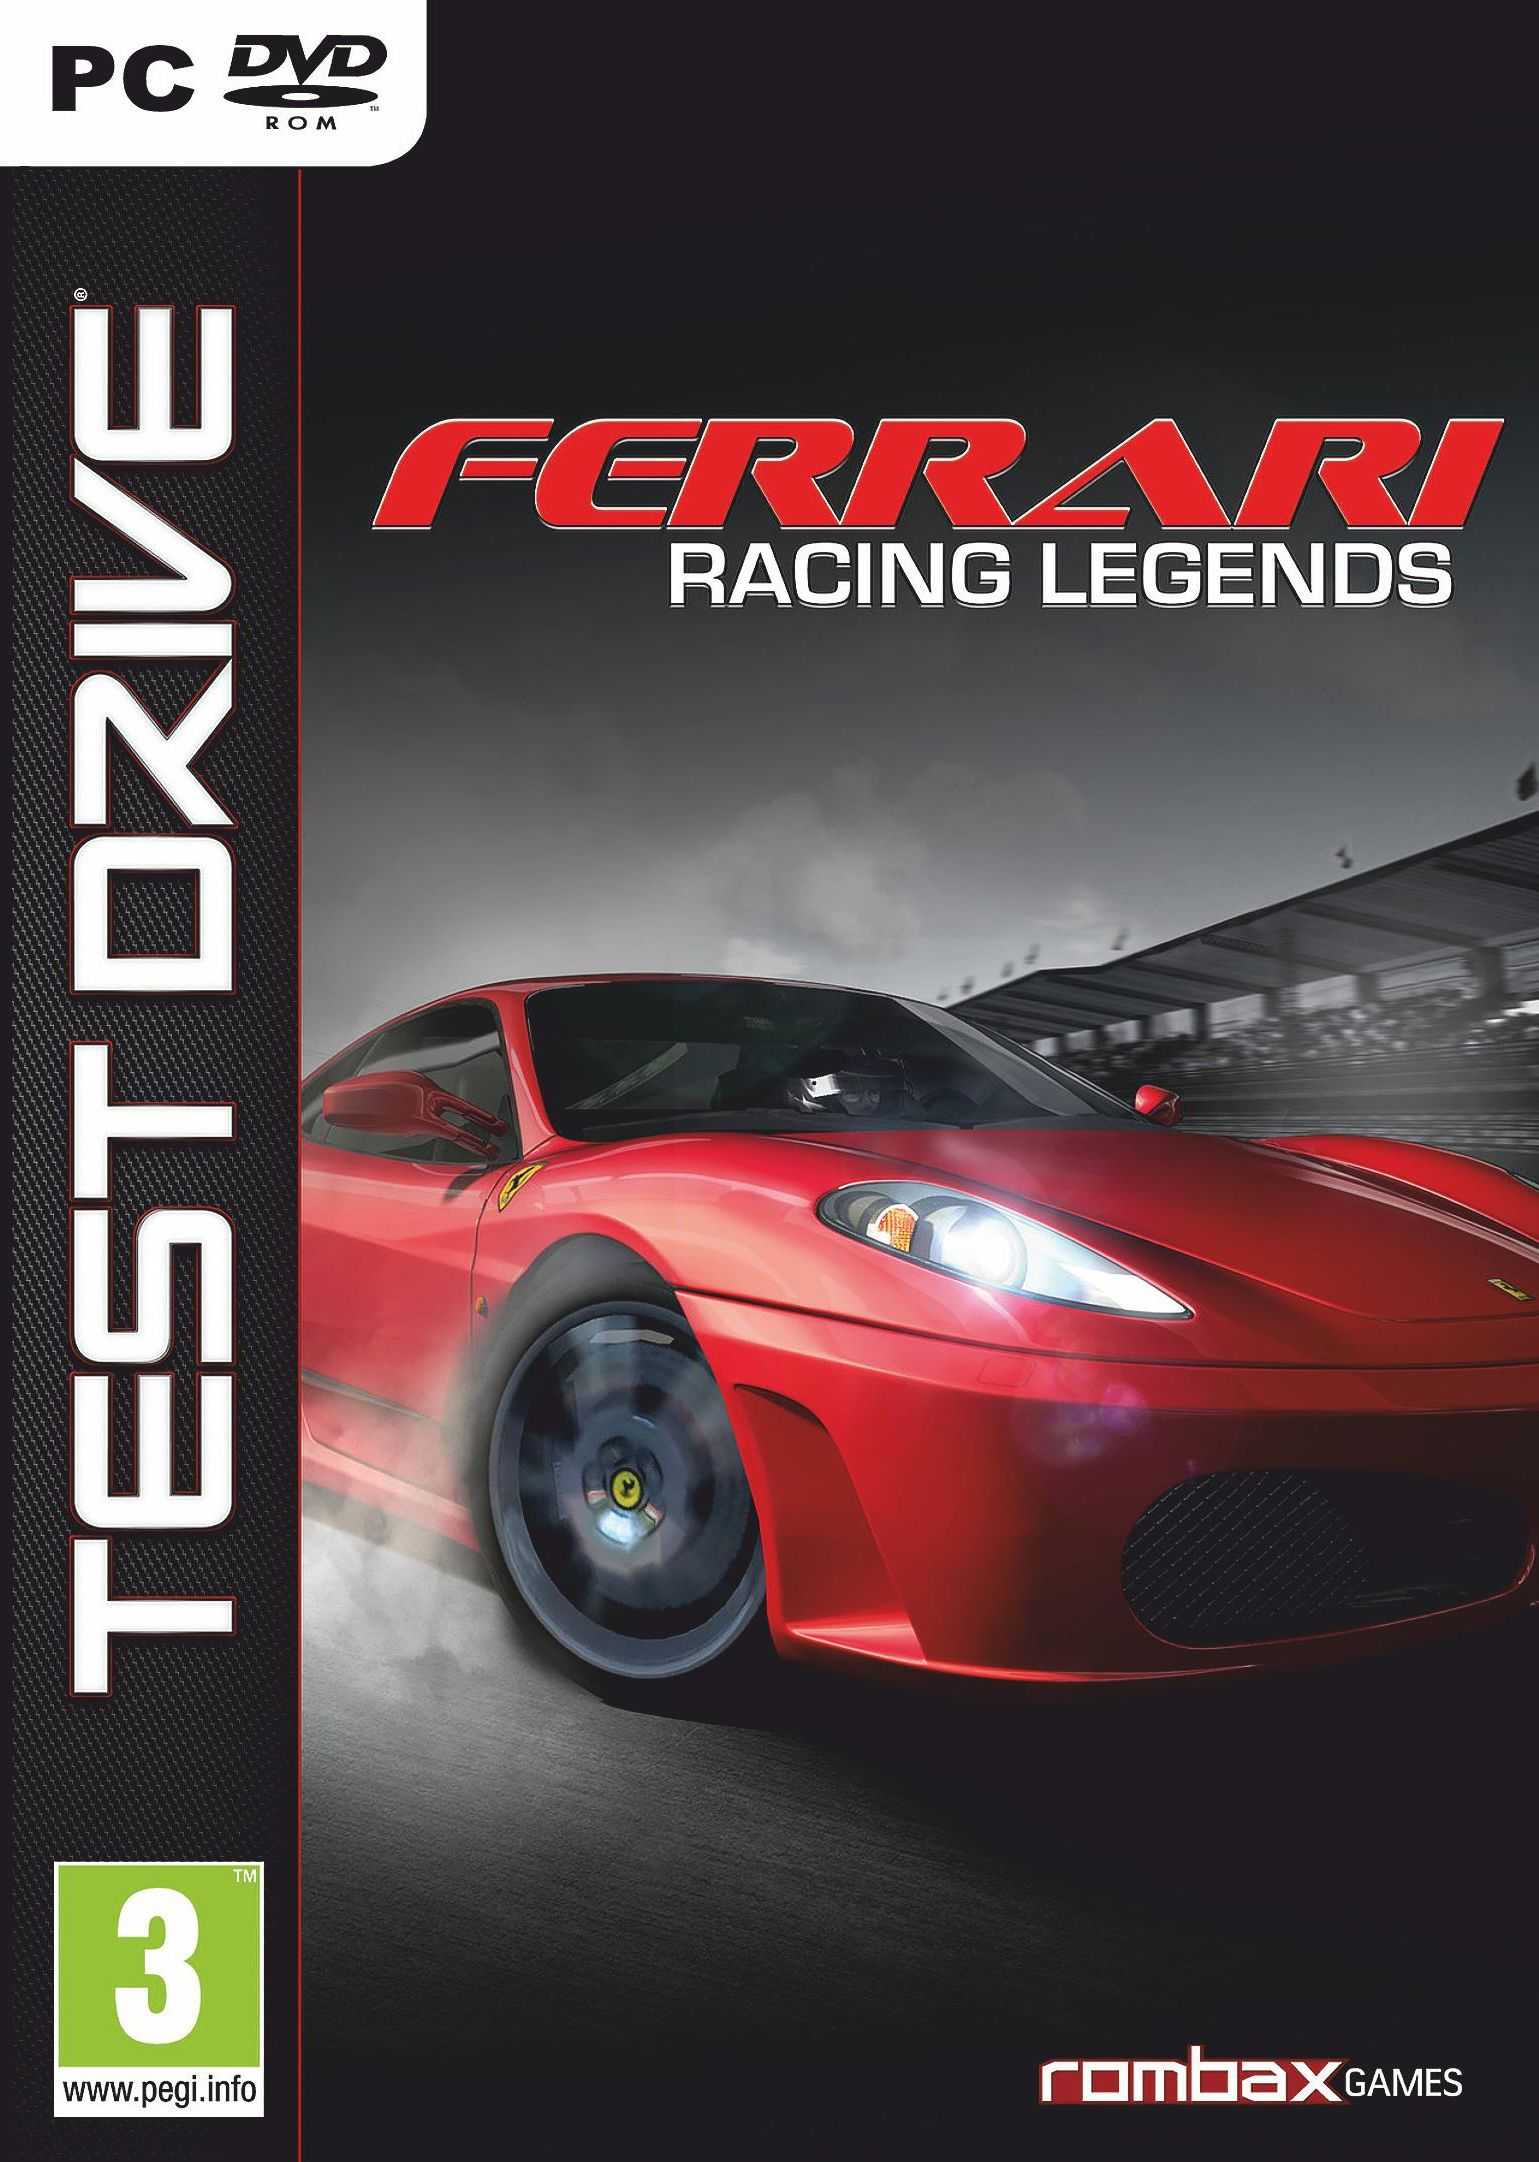 test-drive-ferrari-racing-legends-pc-dvdespanol-multi-5crak-skidrow.jpg